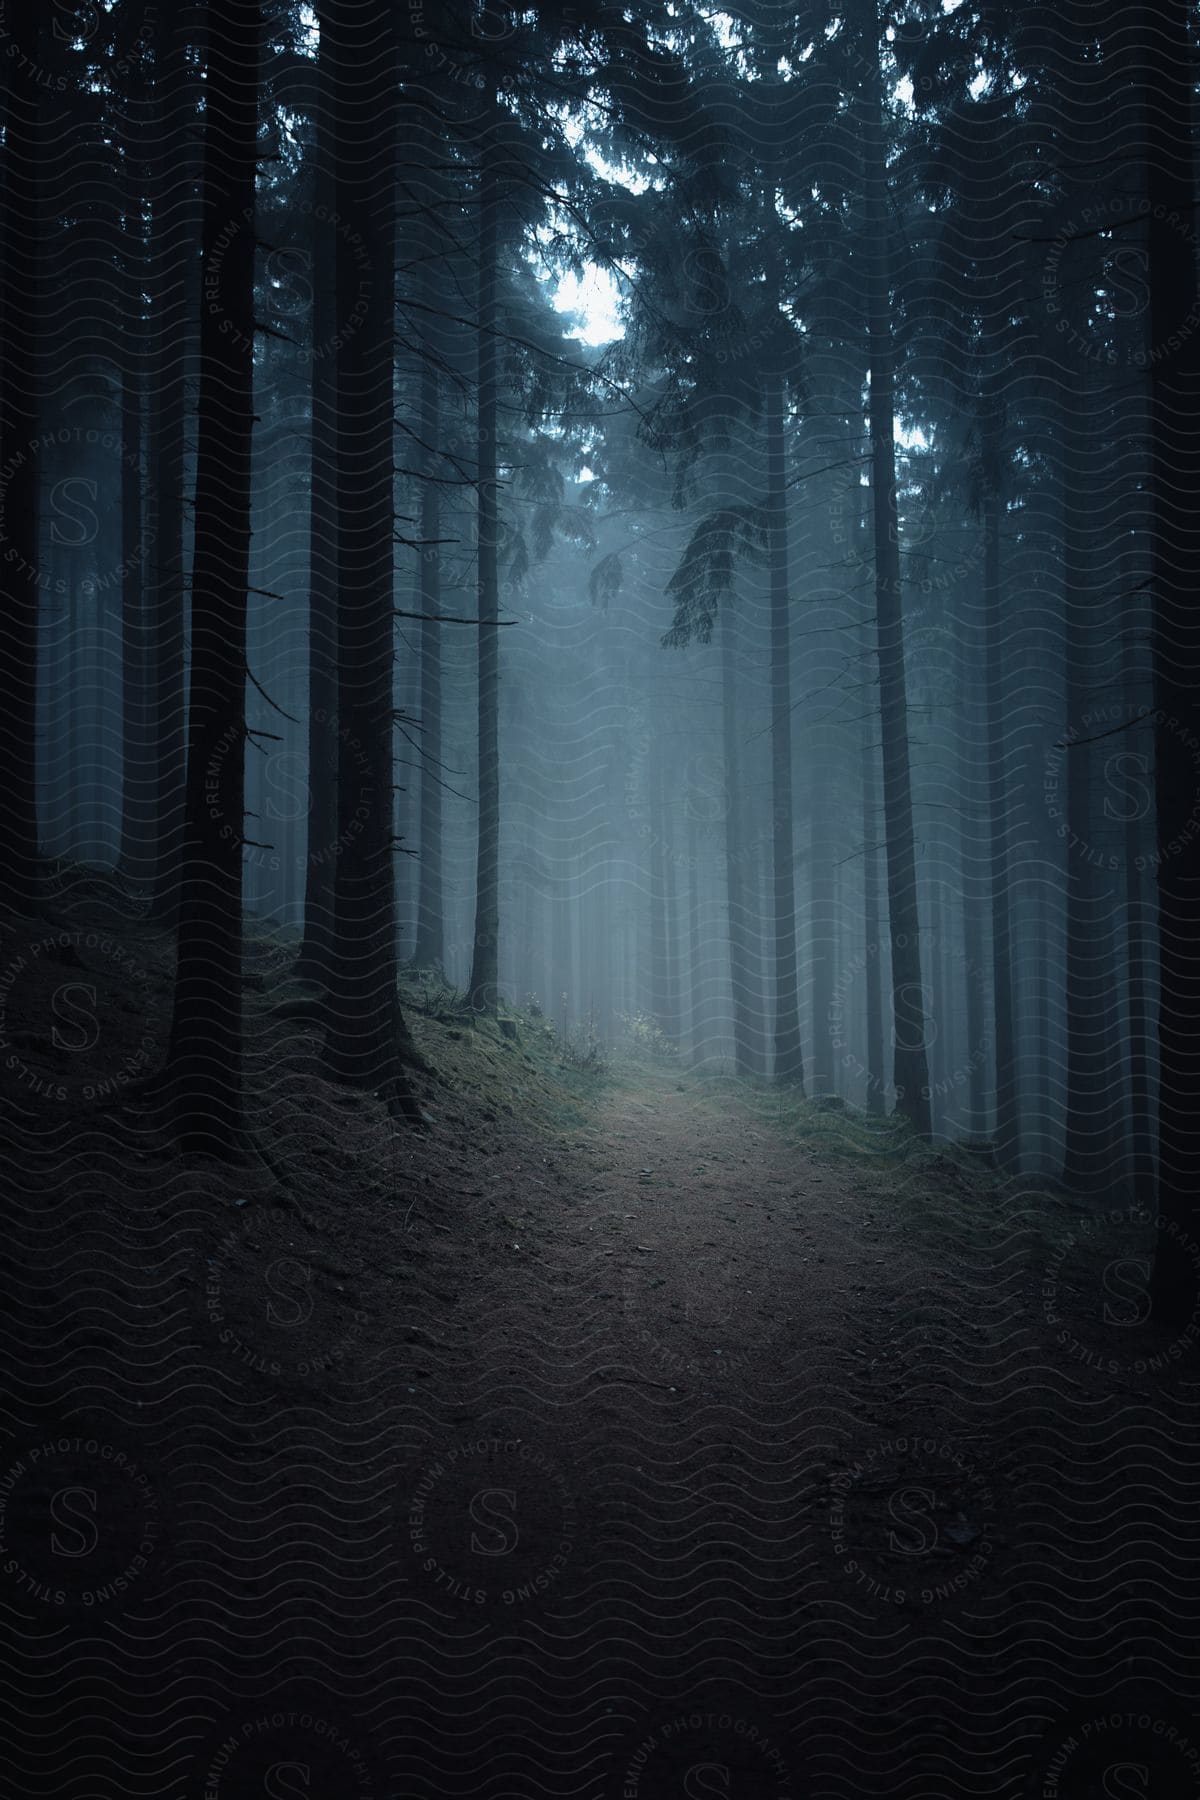 A misty path through a dark forest